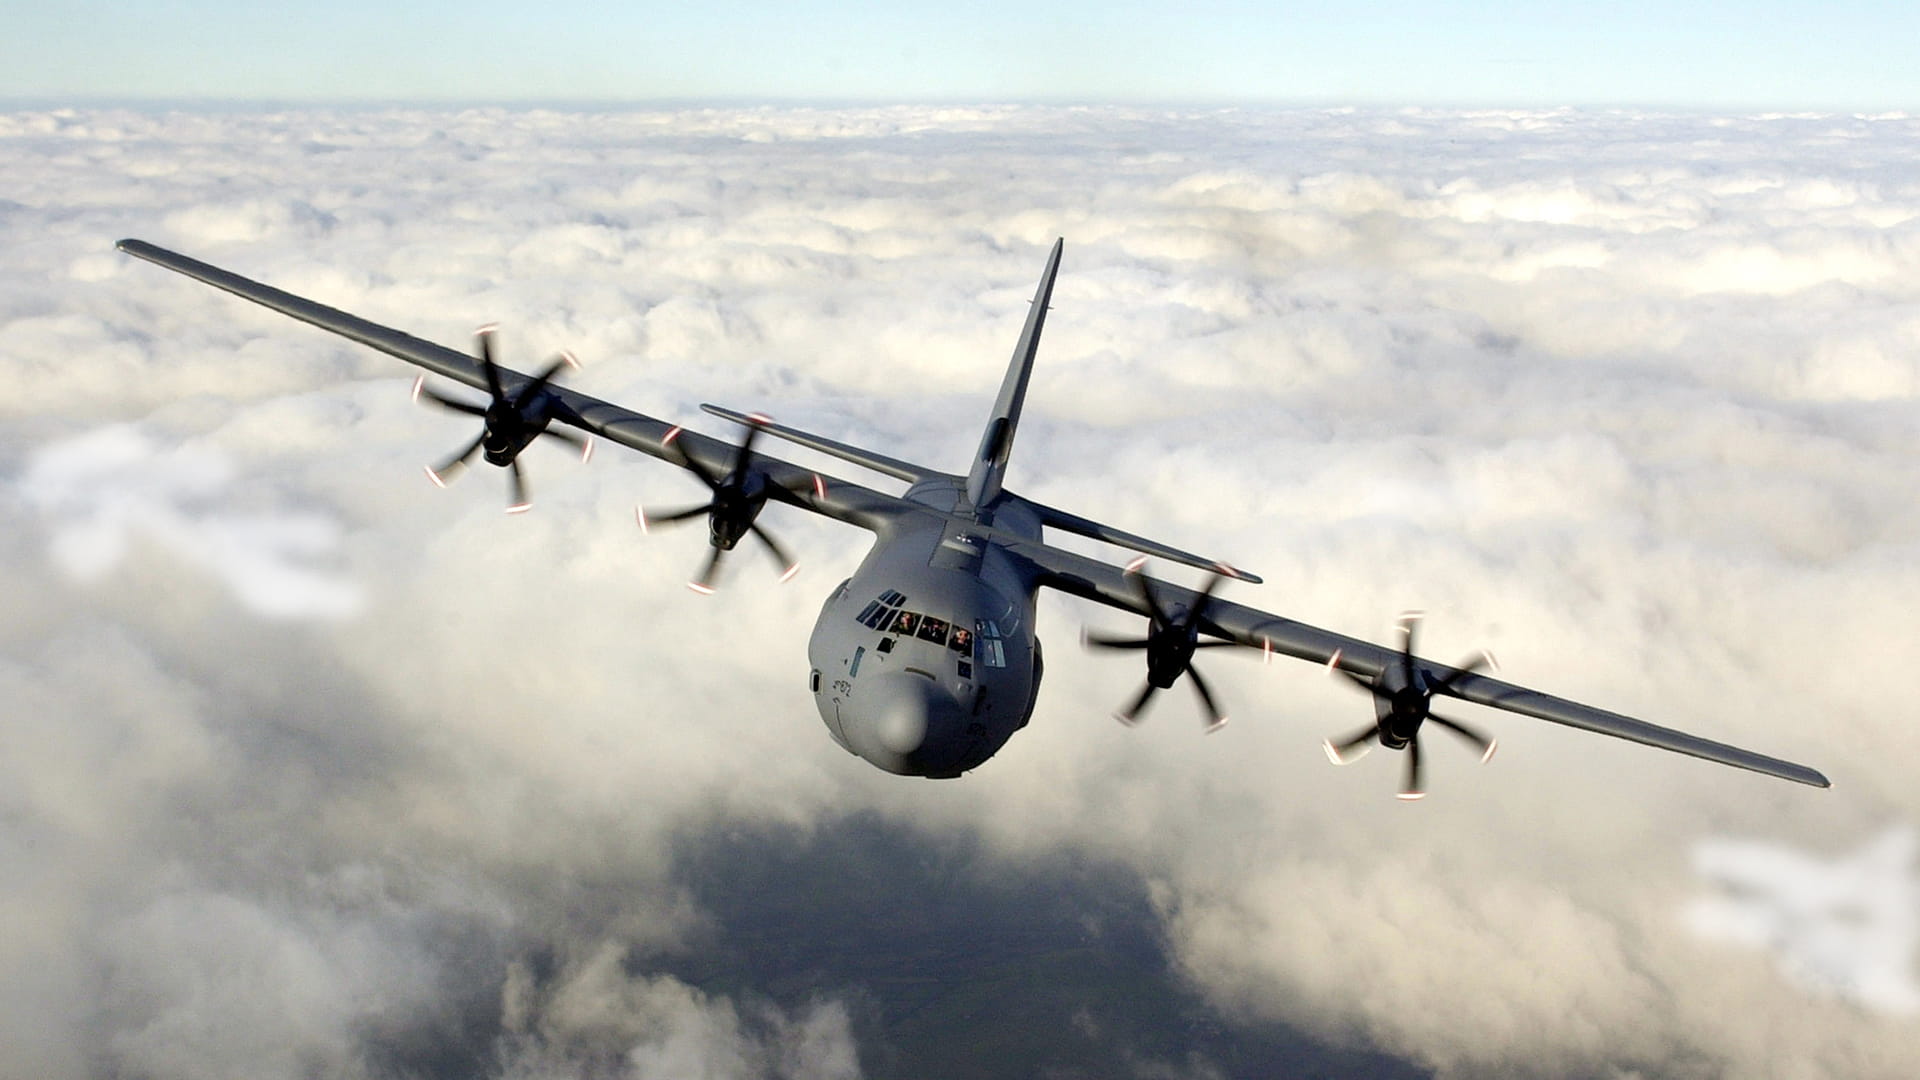 Military C-130 plane in flight